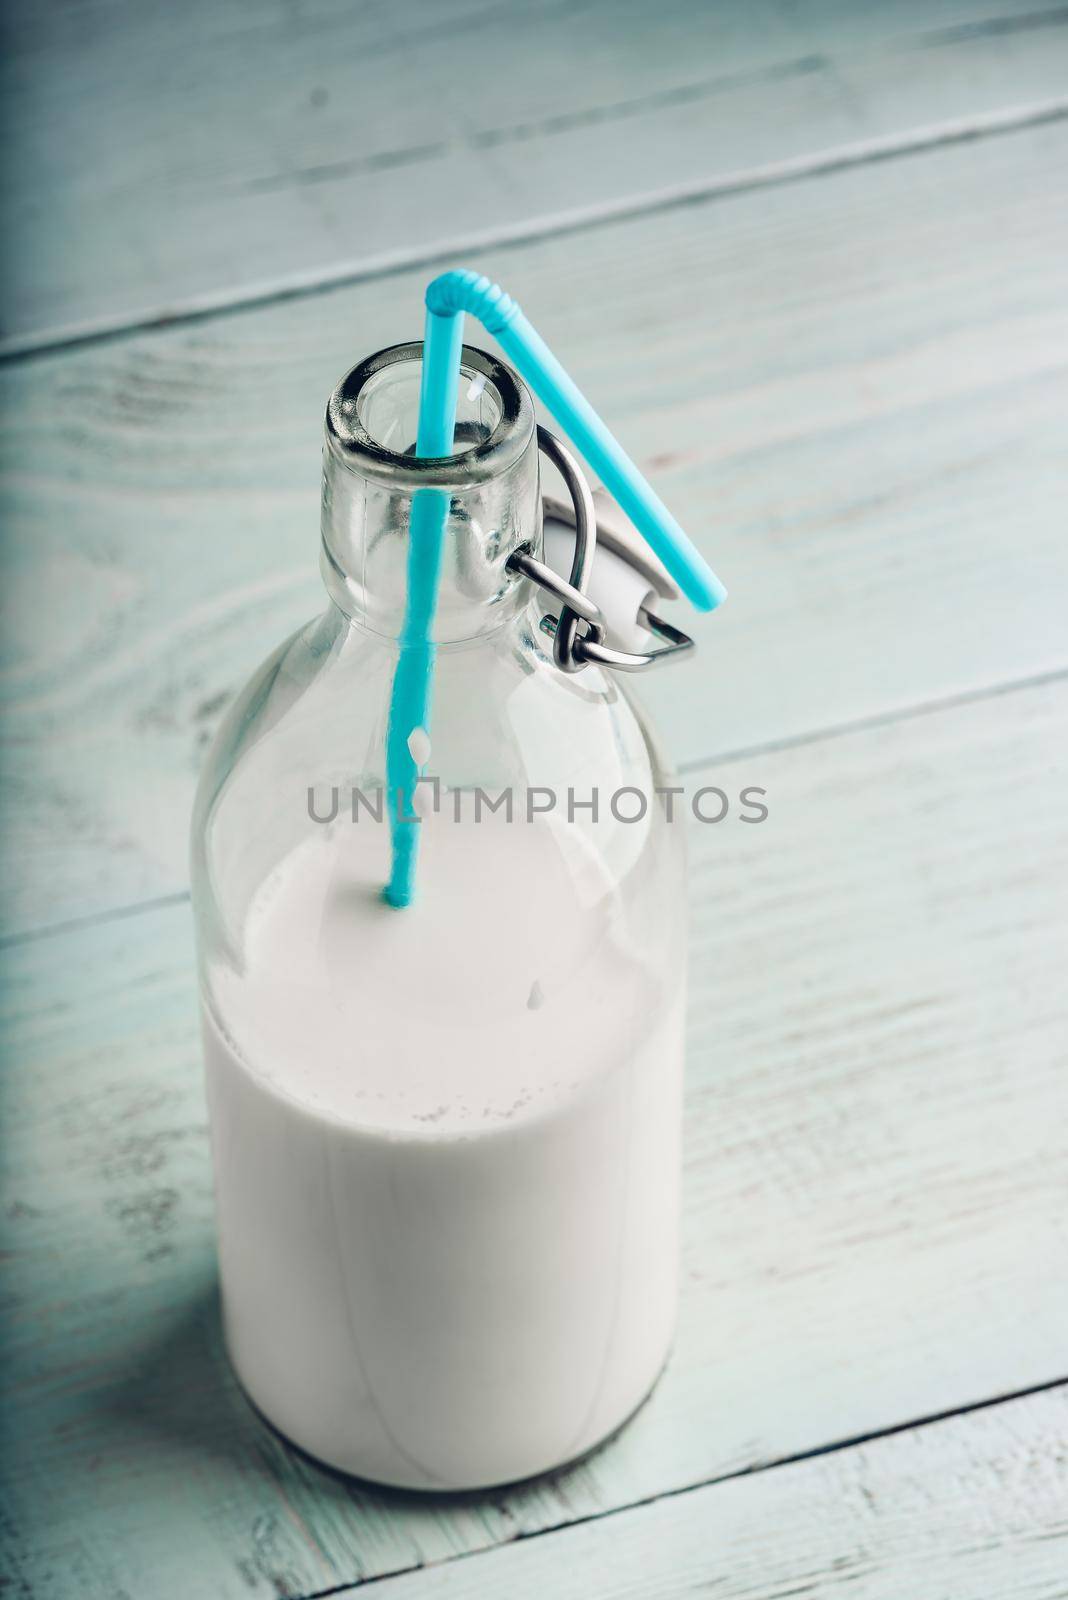 Almand milk in bottle with blue straw by Seva_blsv